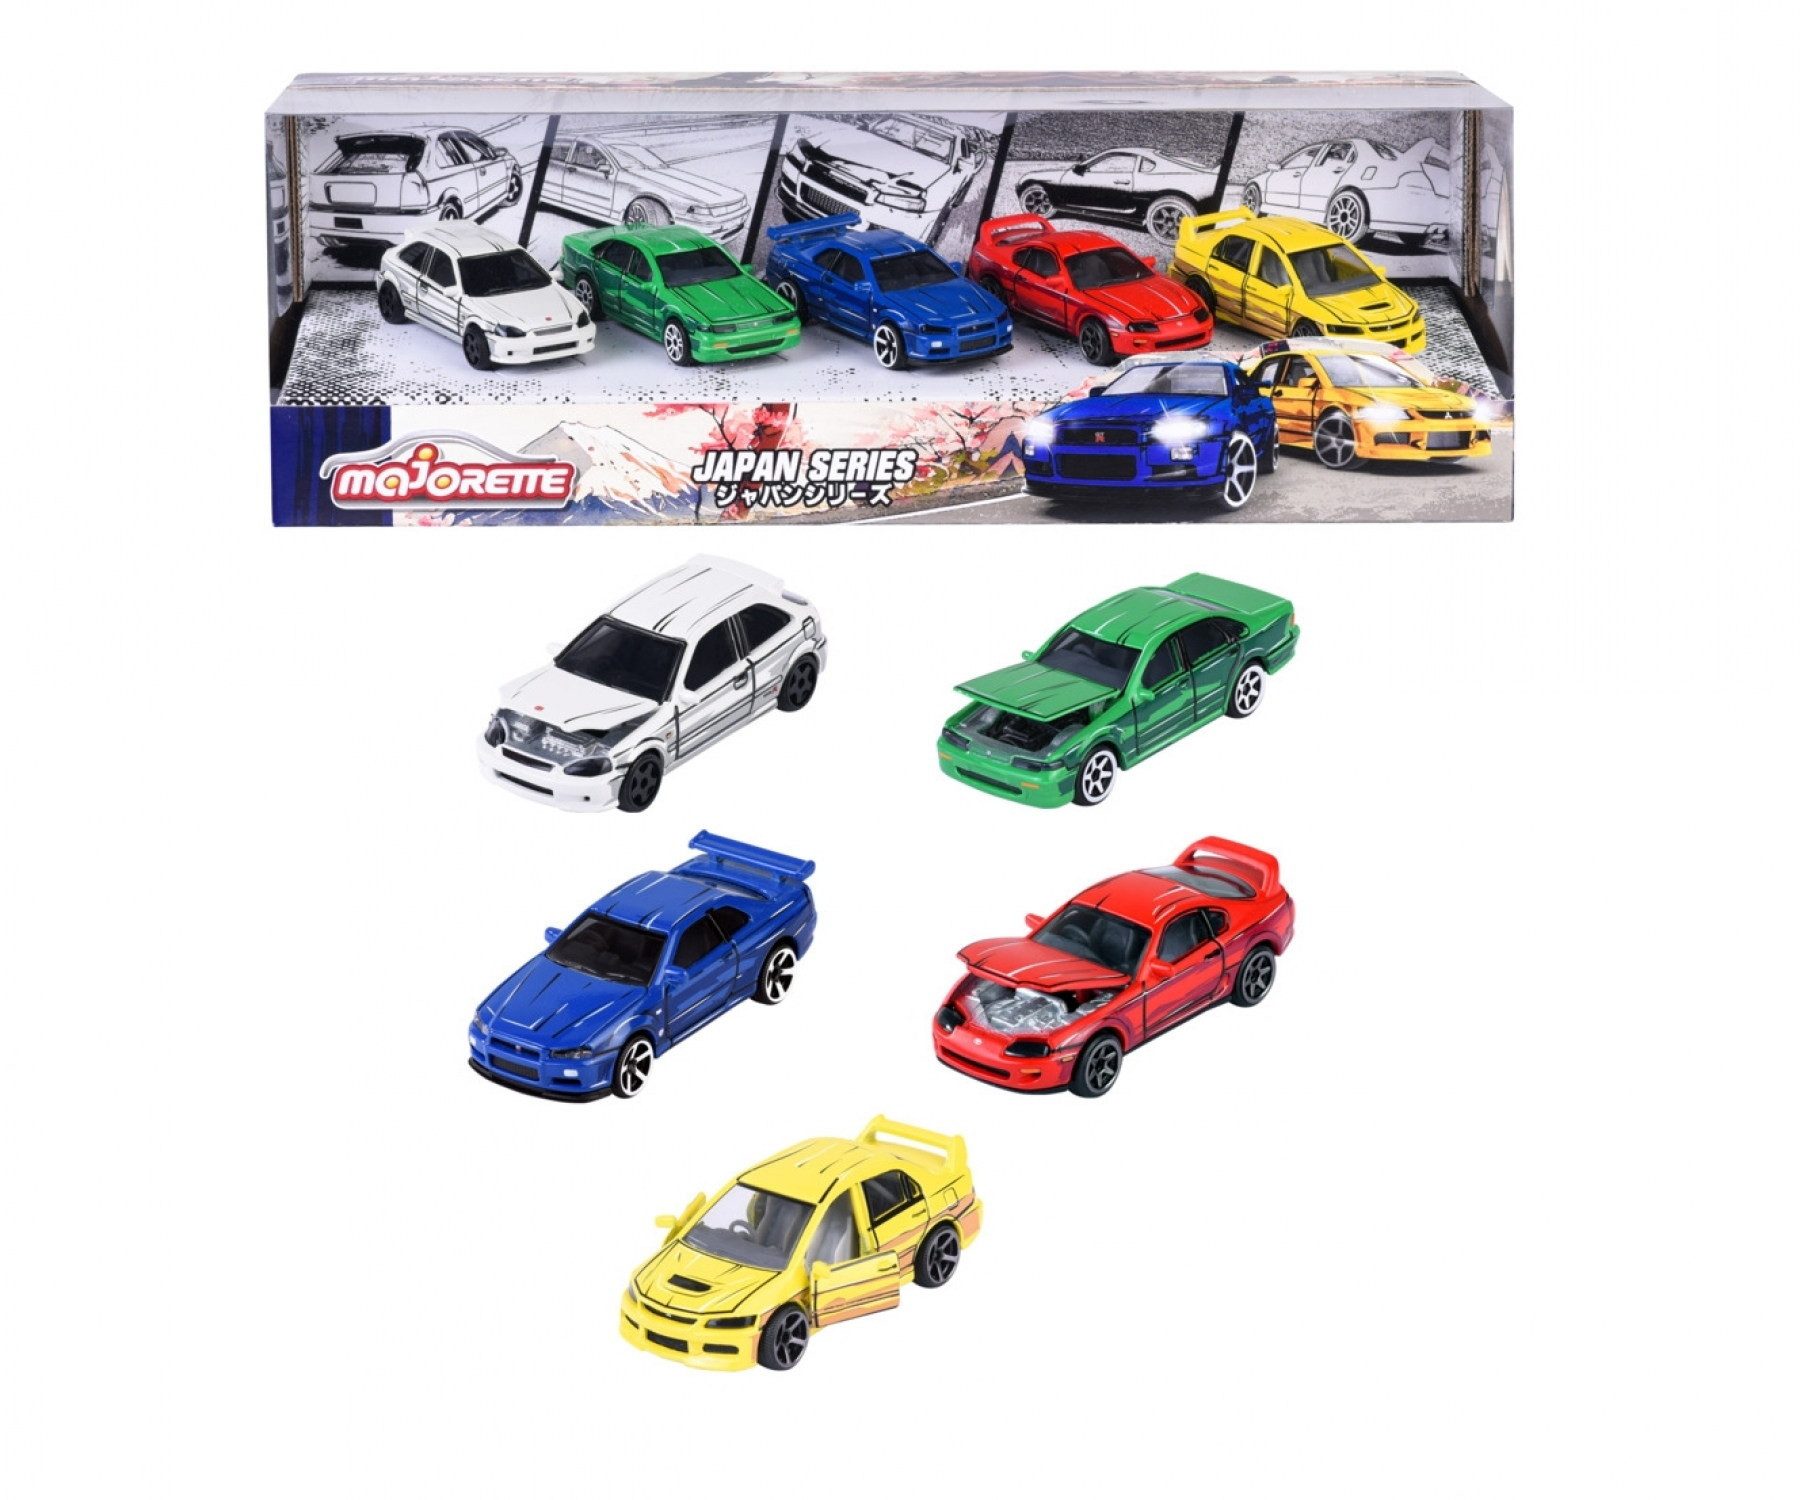 majORETTE Spielzeug-Auto Majorette Spielzeugauto Premium Cars Japan Series 5 Pieces Giftpack 21